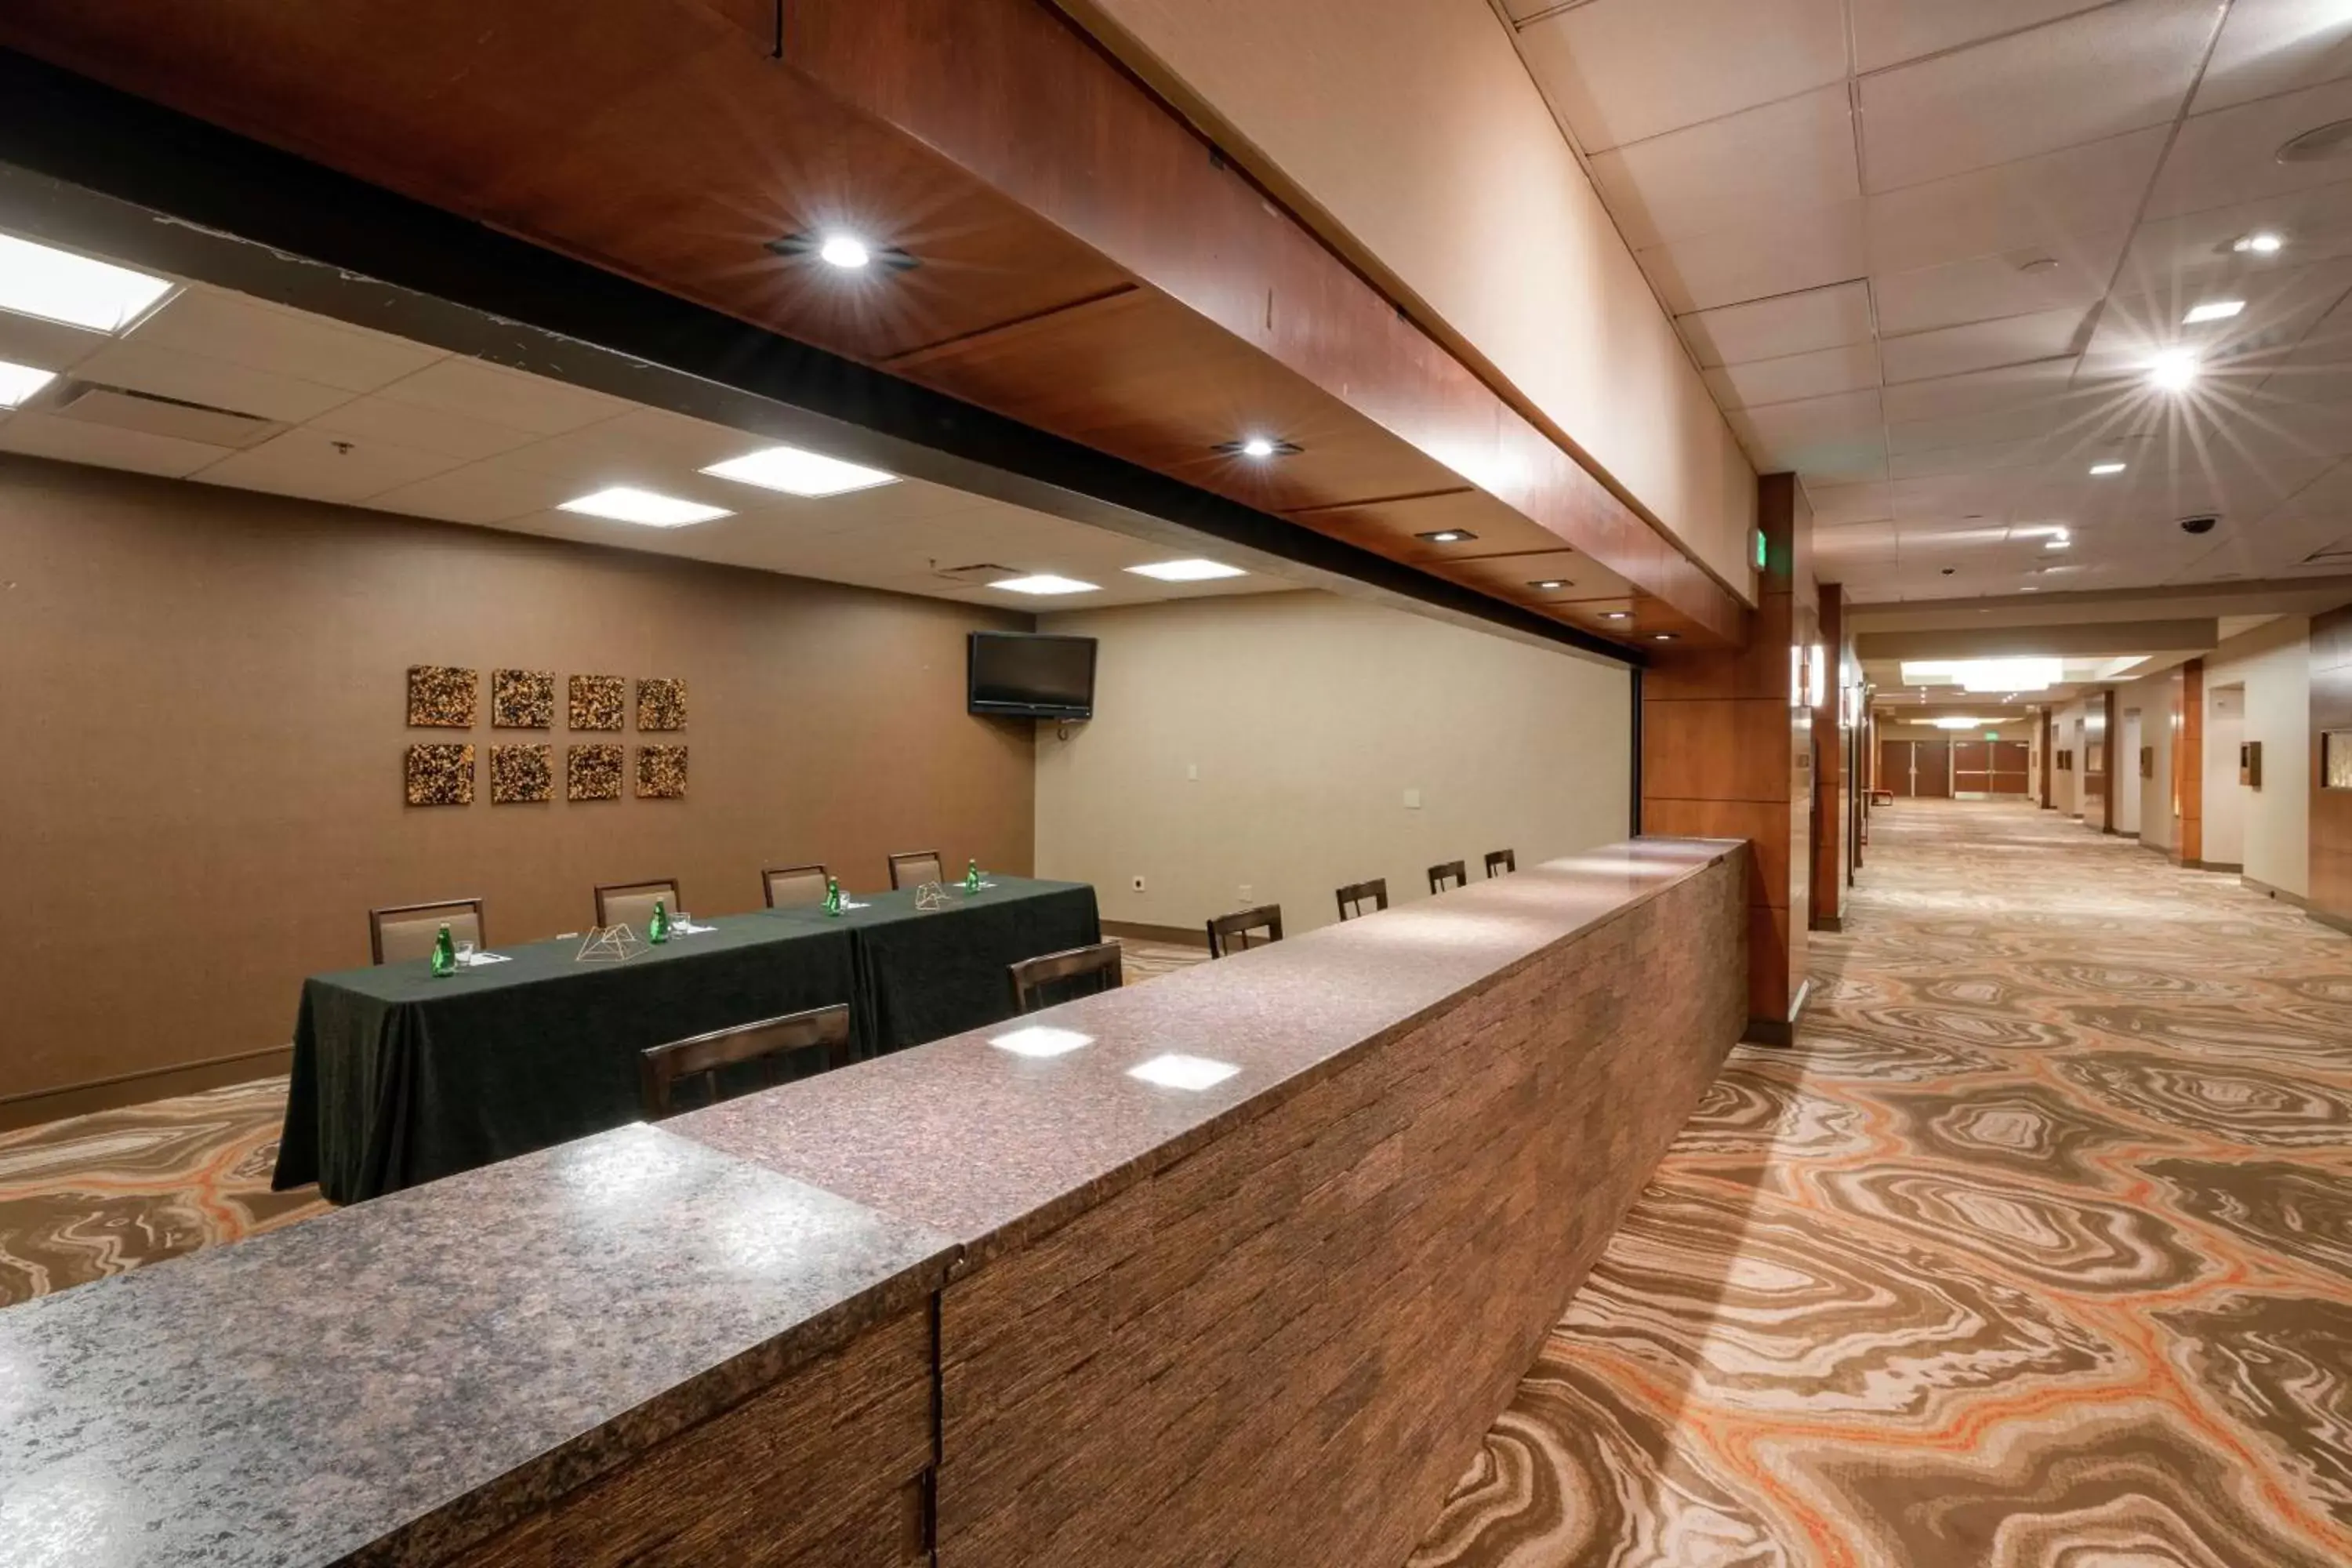 Lobby or reception in Hilton Denver City Center